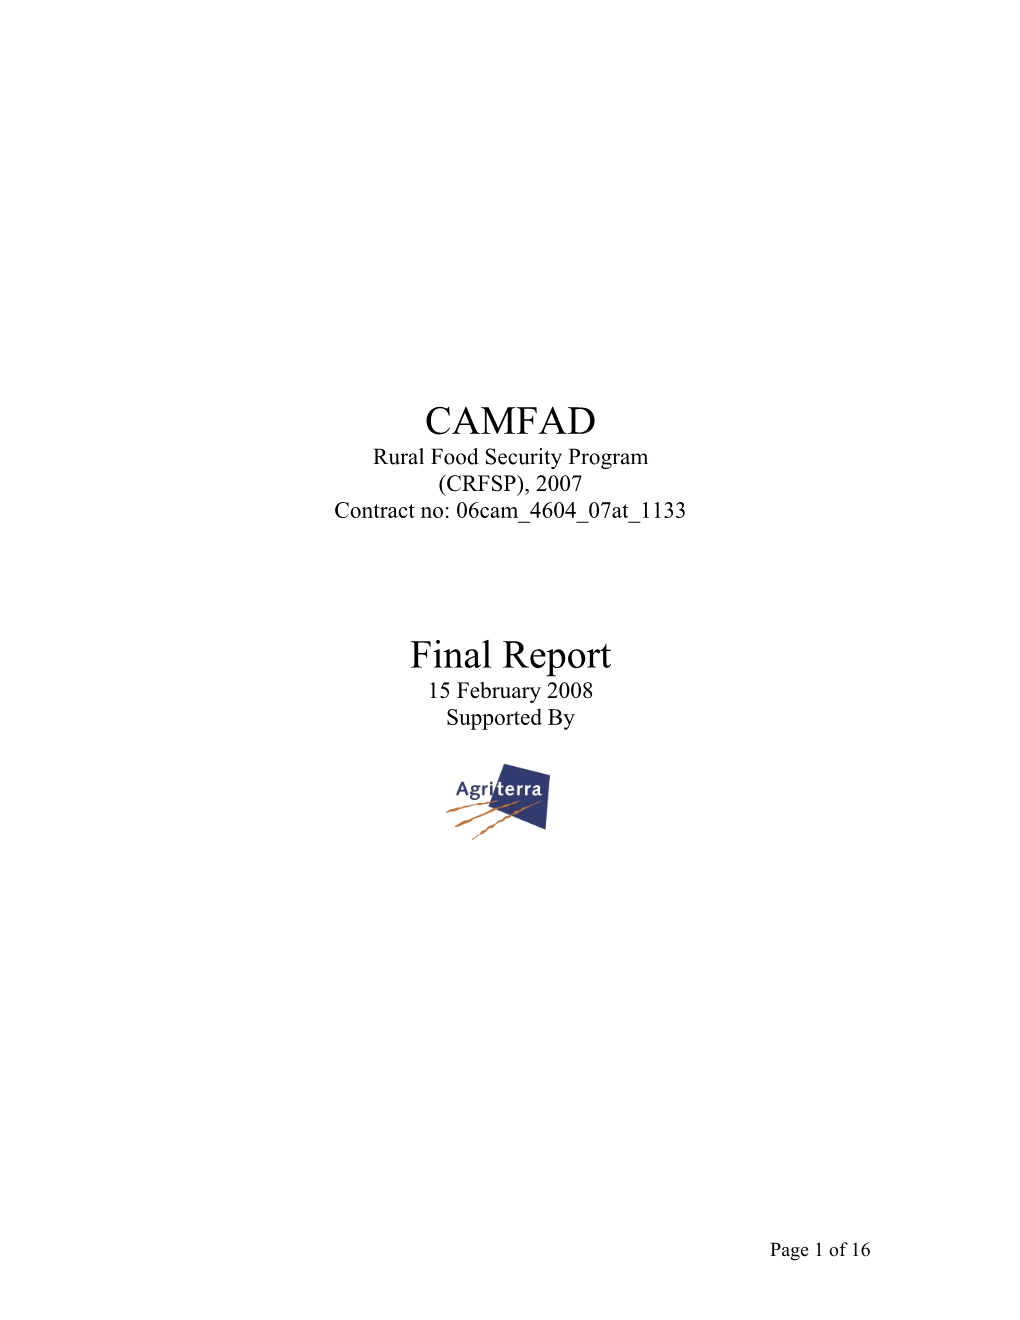 CAMFAD Final Report